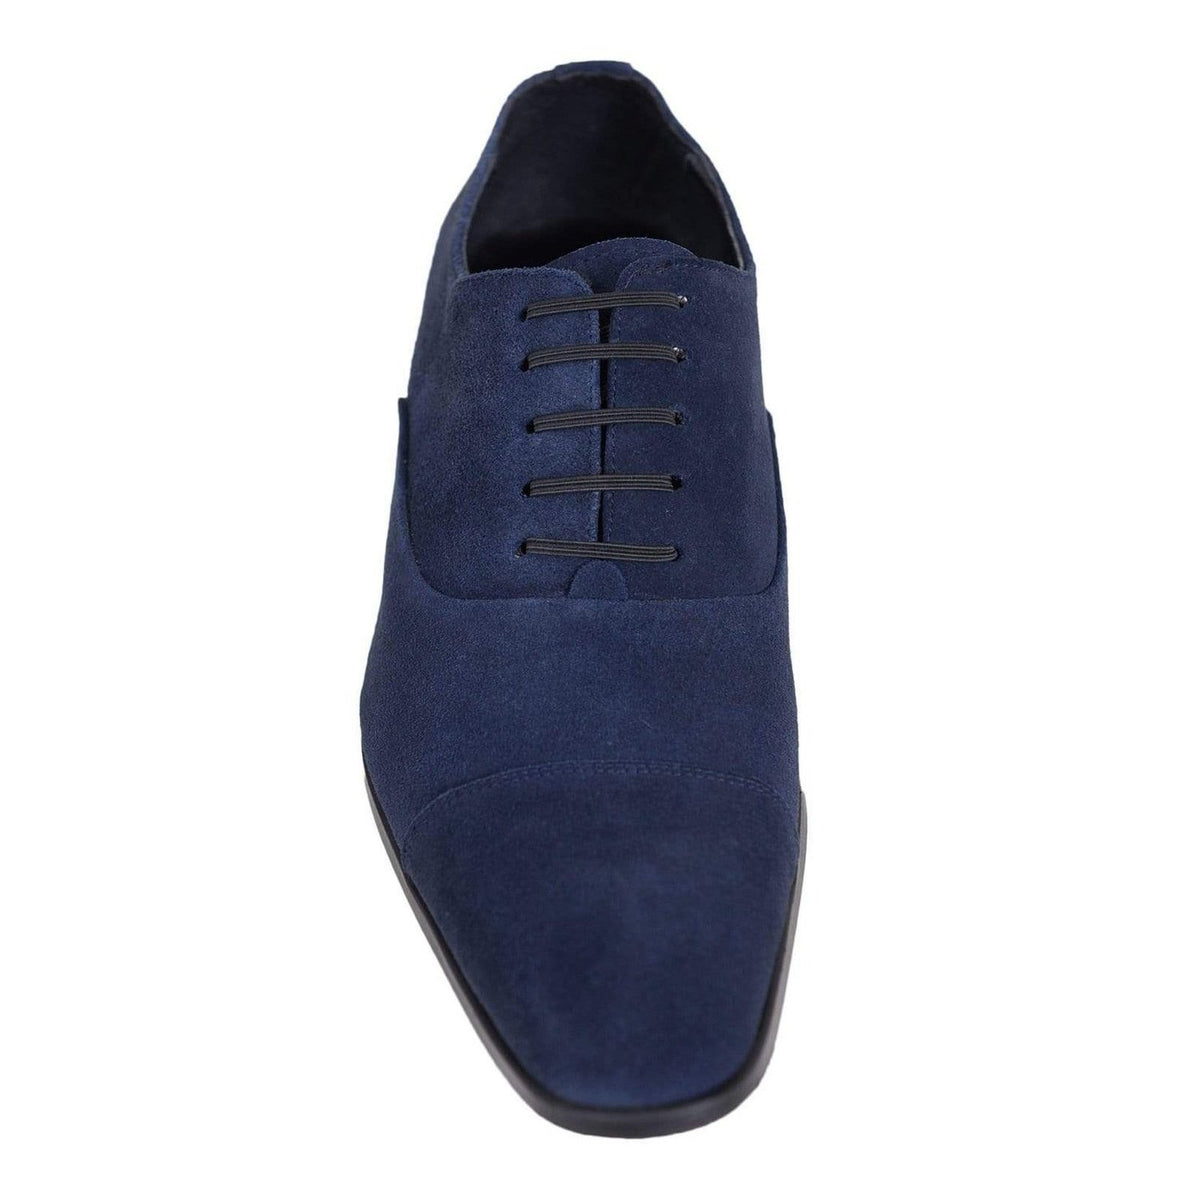 Carrucci Shoes For Amazon Carrucci Mens Navy Blue Suede Cap Toe Oxford Leather Dress Shoes